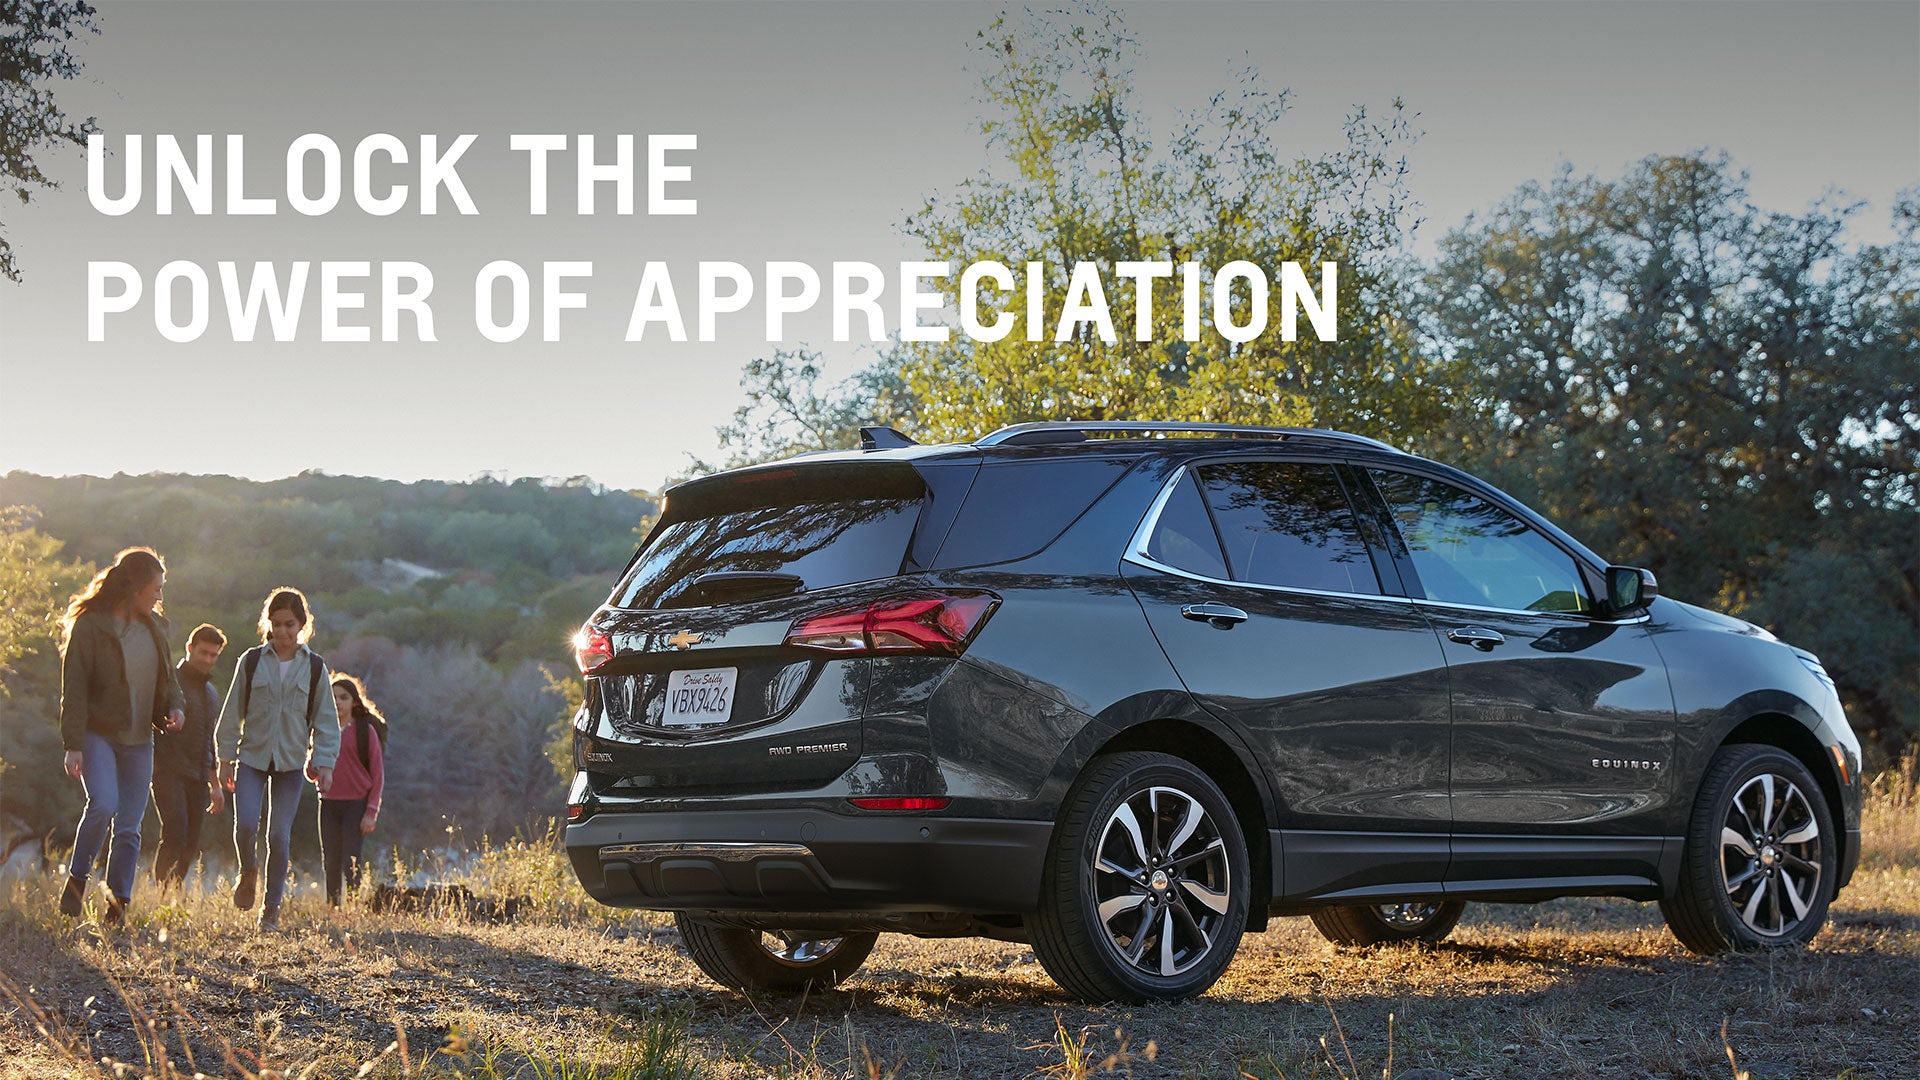 Unlock the power of appreciation | Lipscomb Chevrolet GMC in Elk City OK